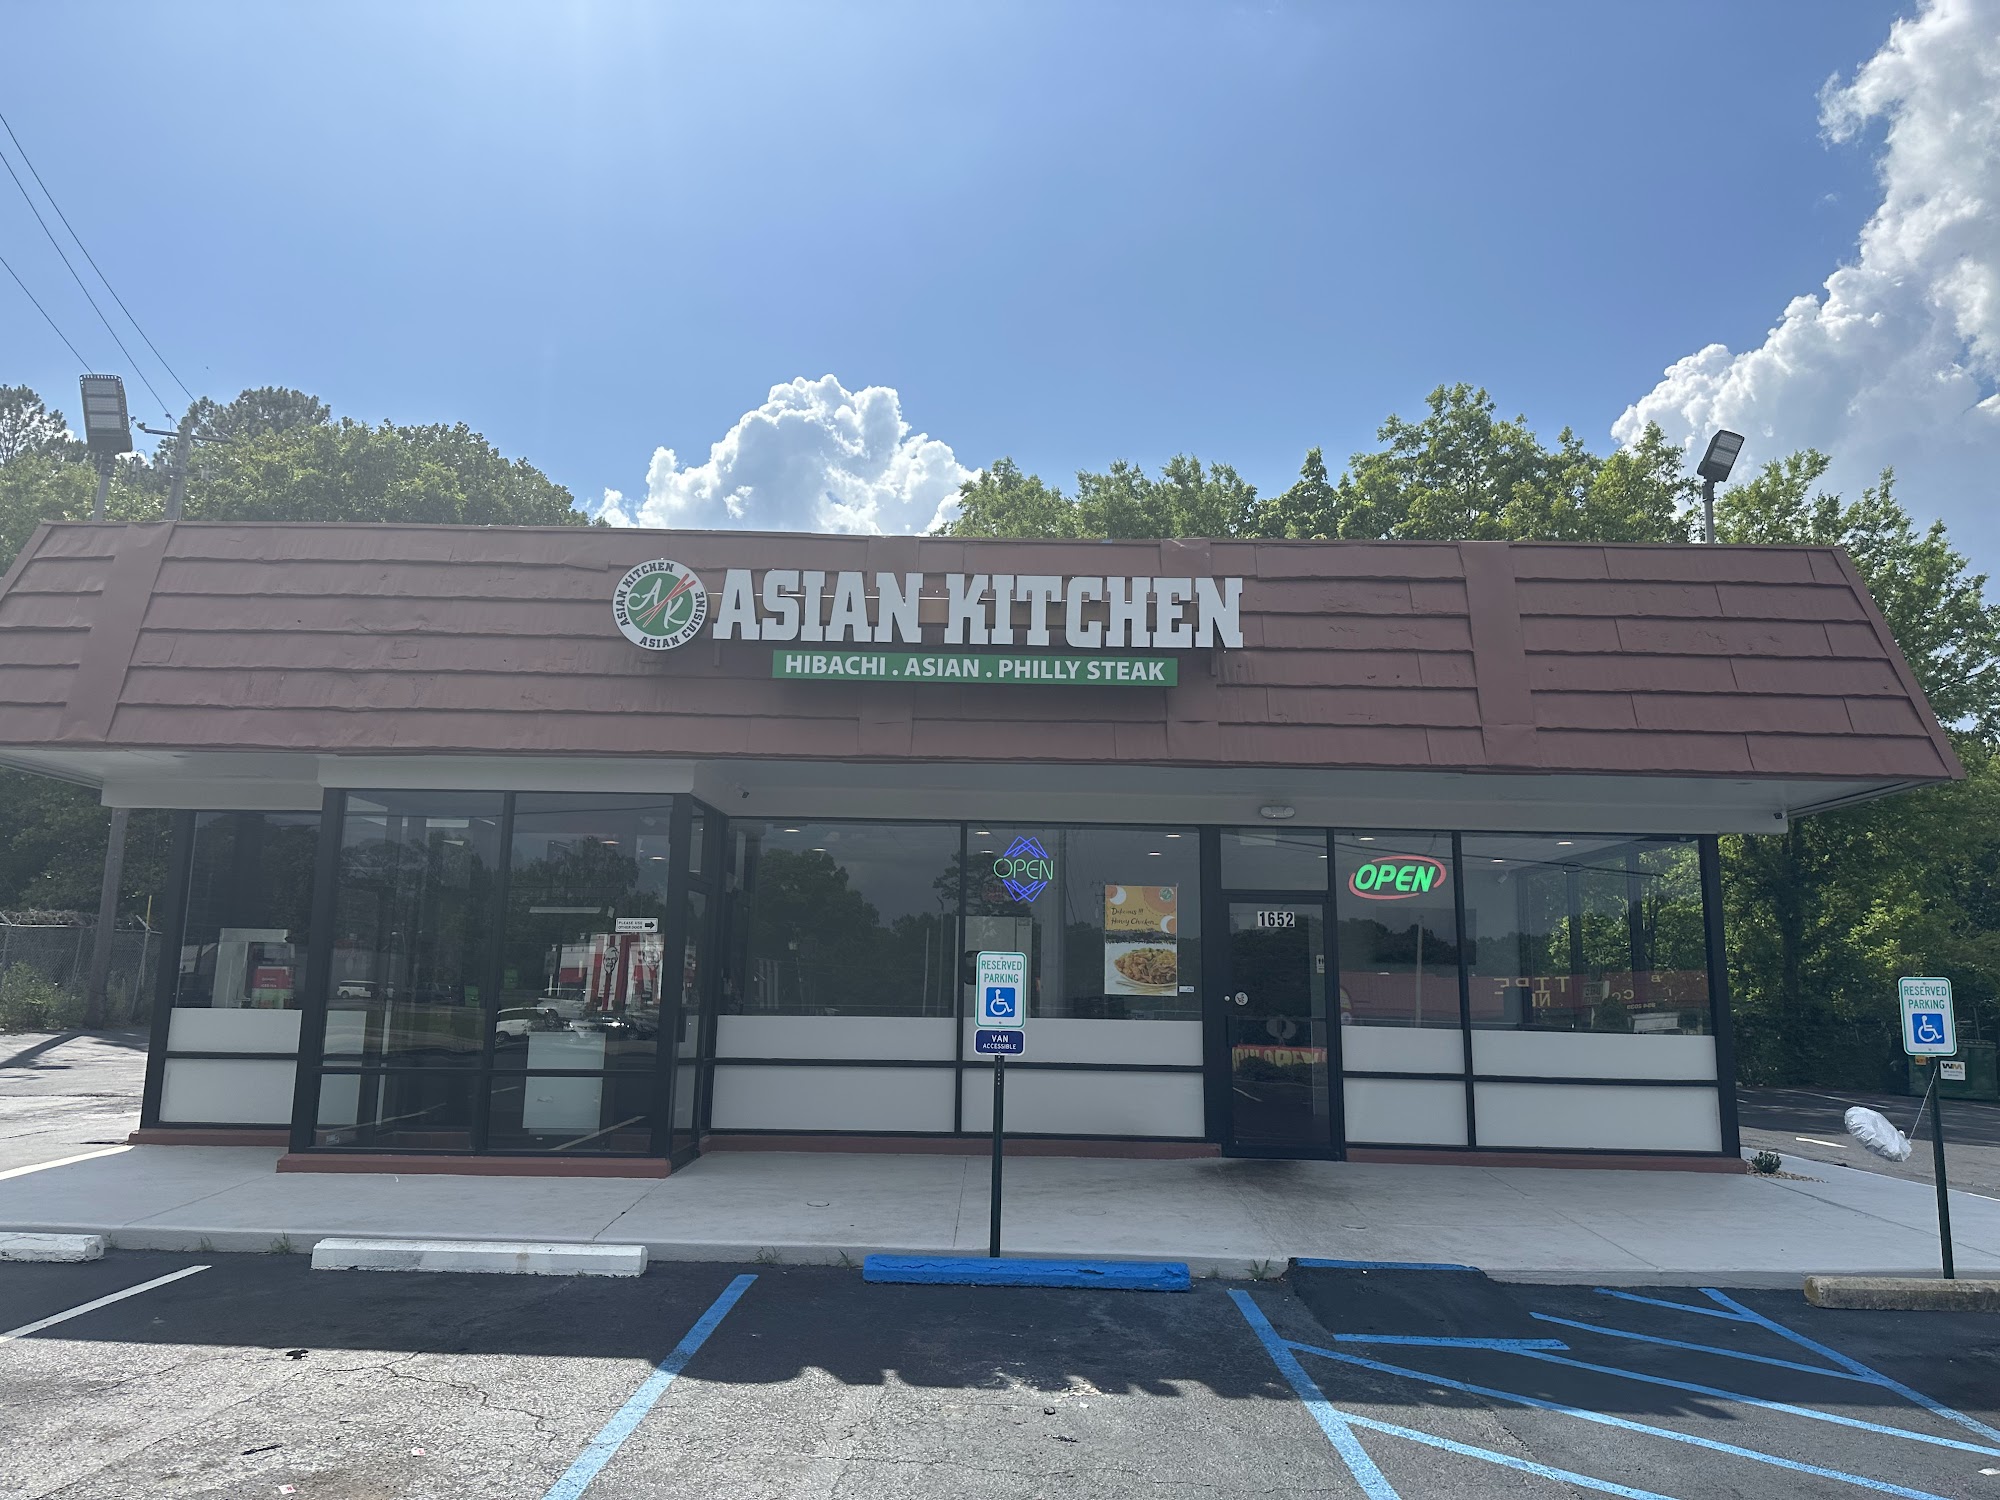 Asian Kitchen Birmingham